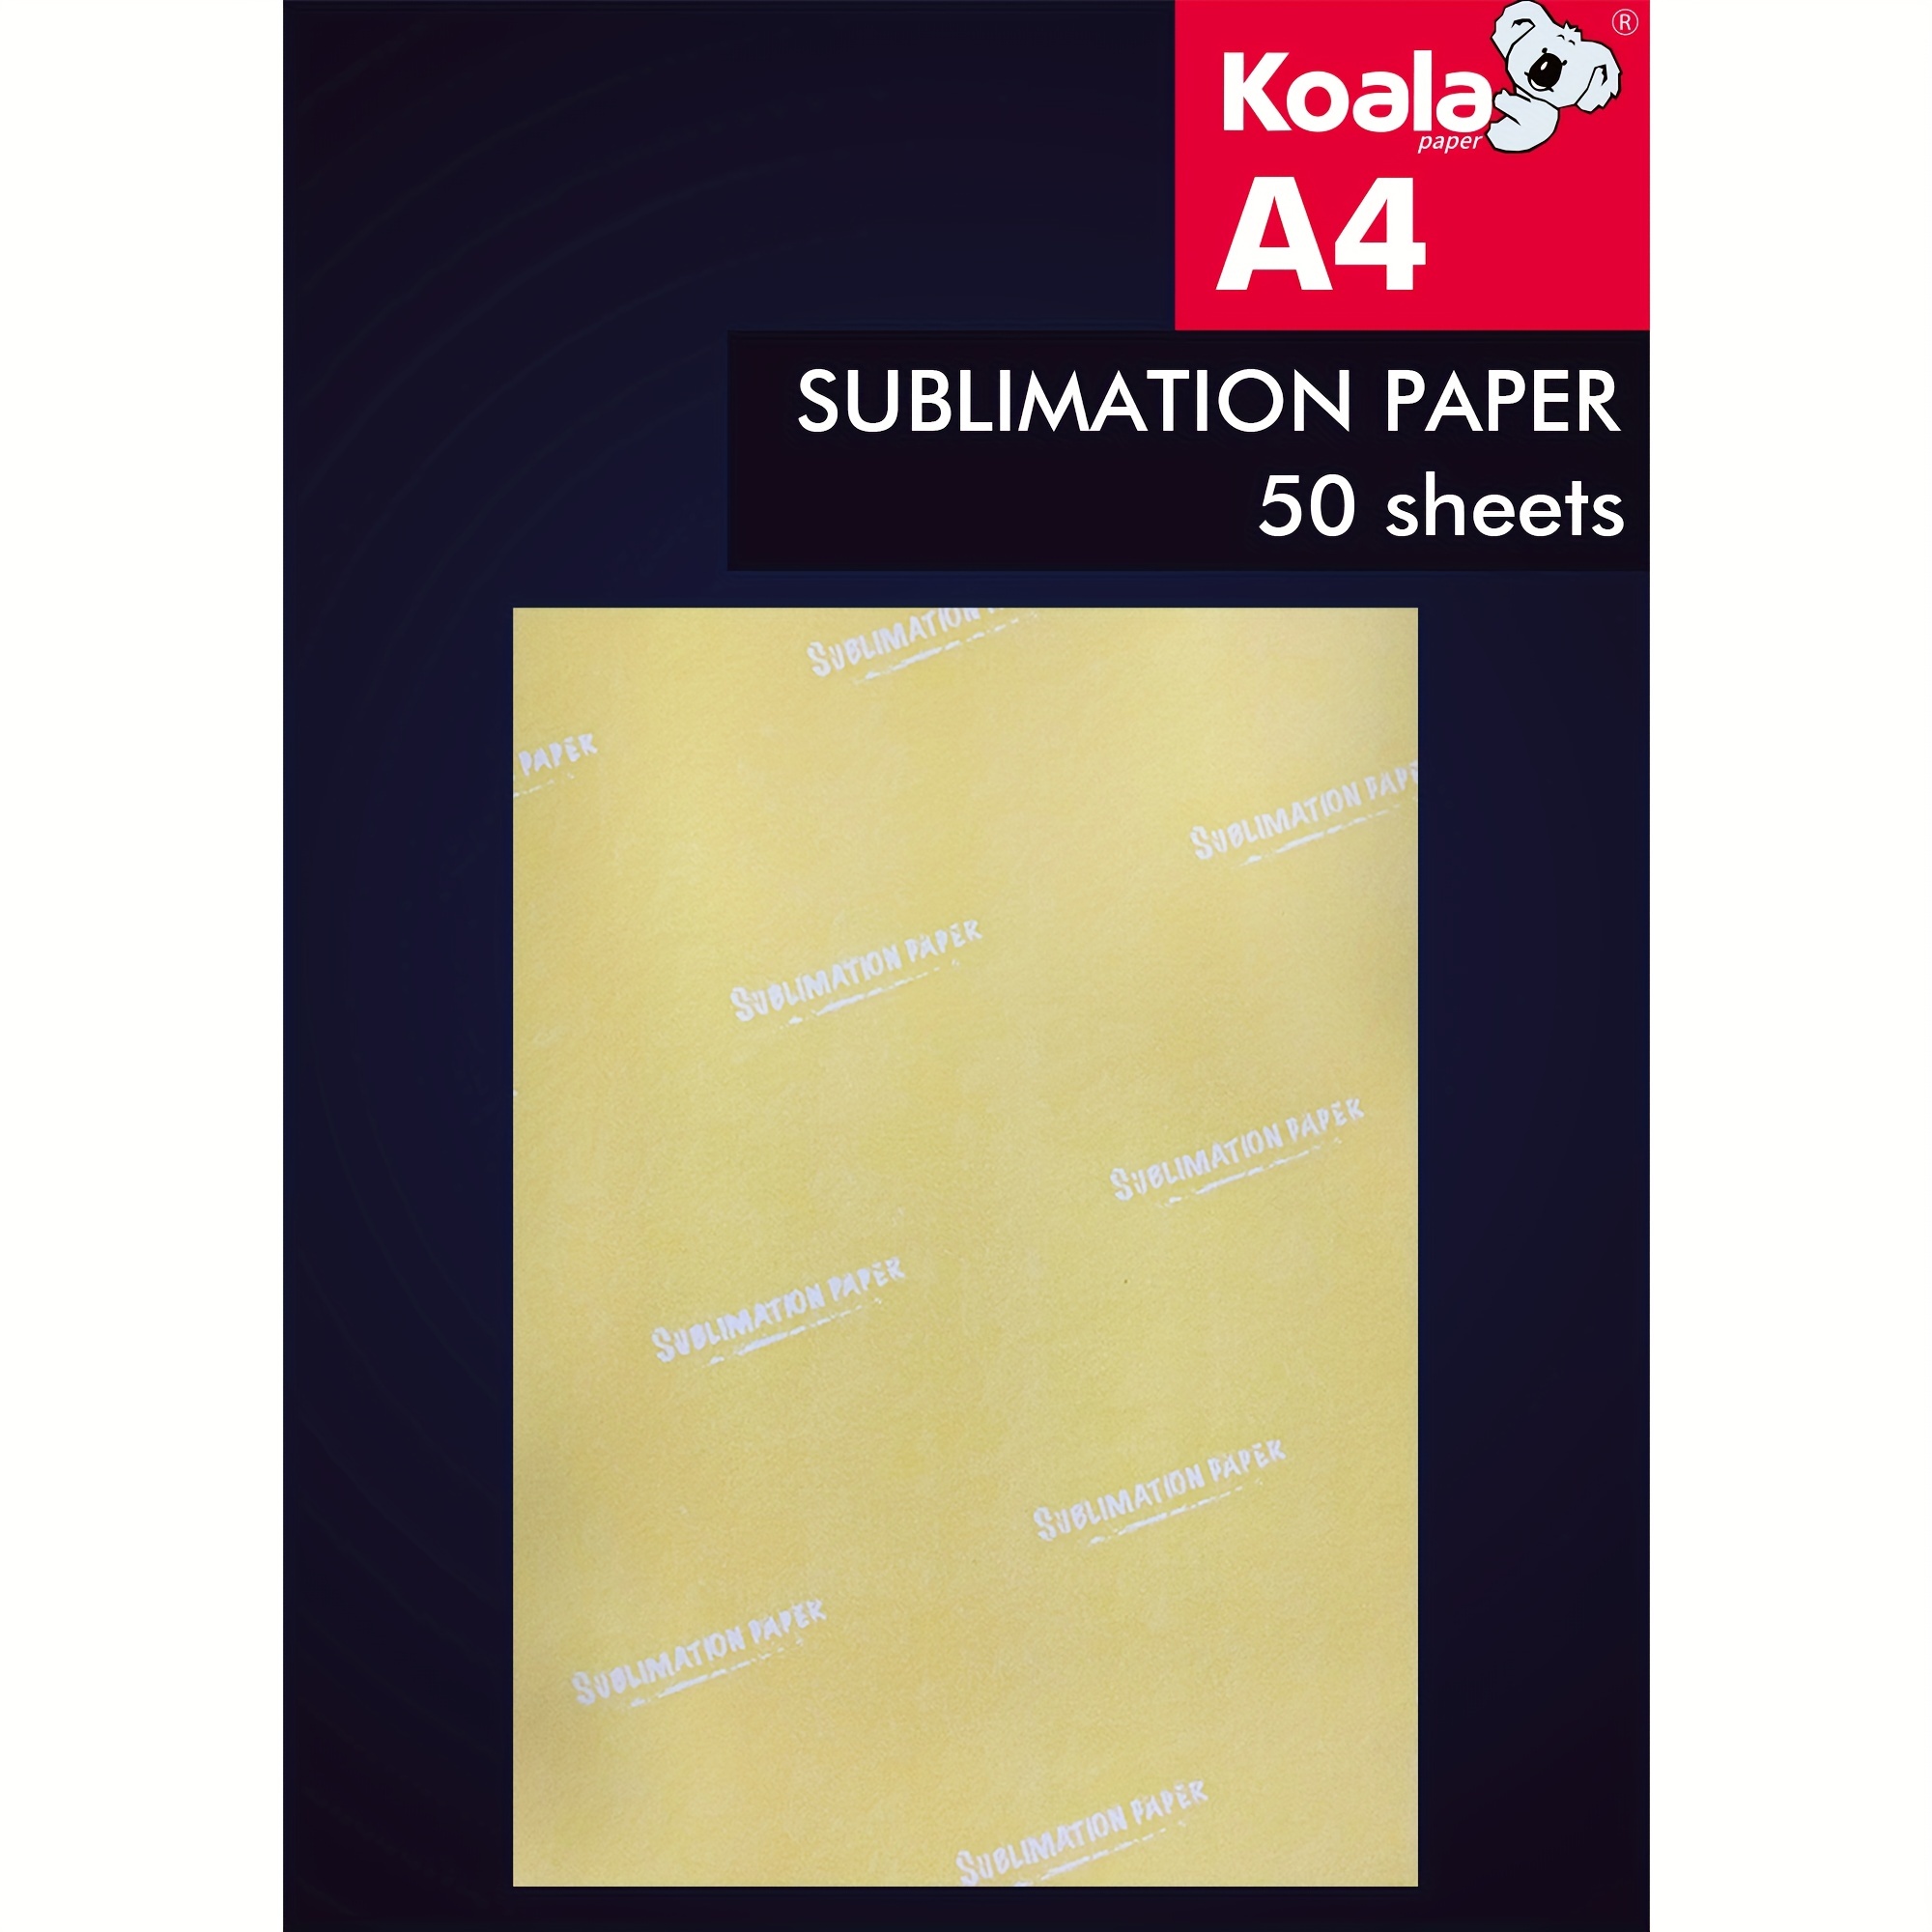 Sublimation Paper Koala